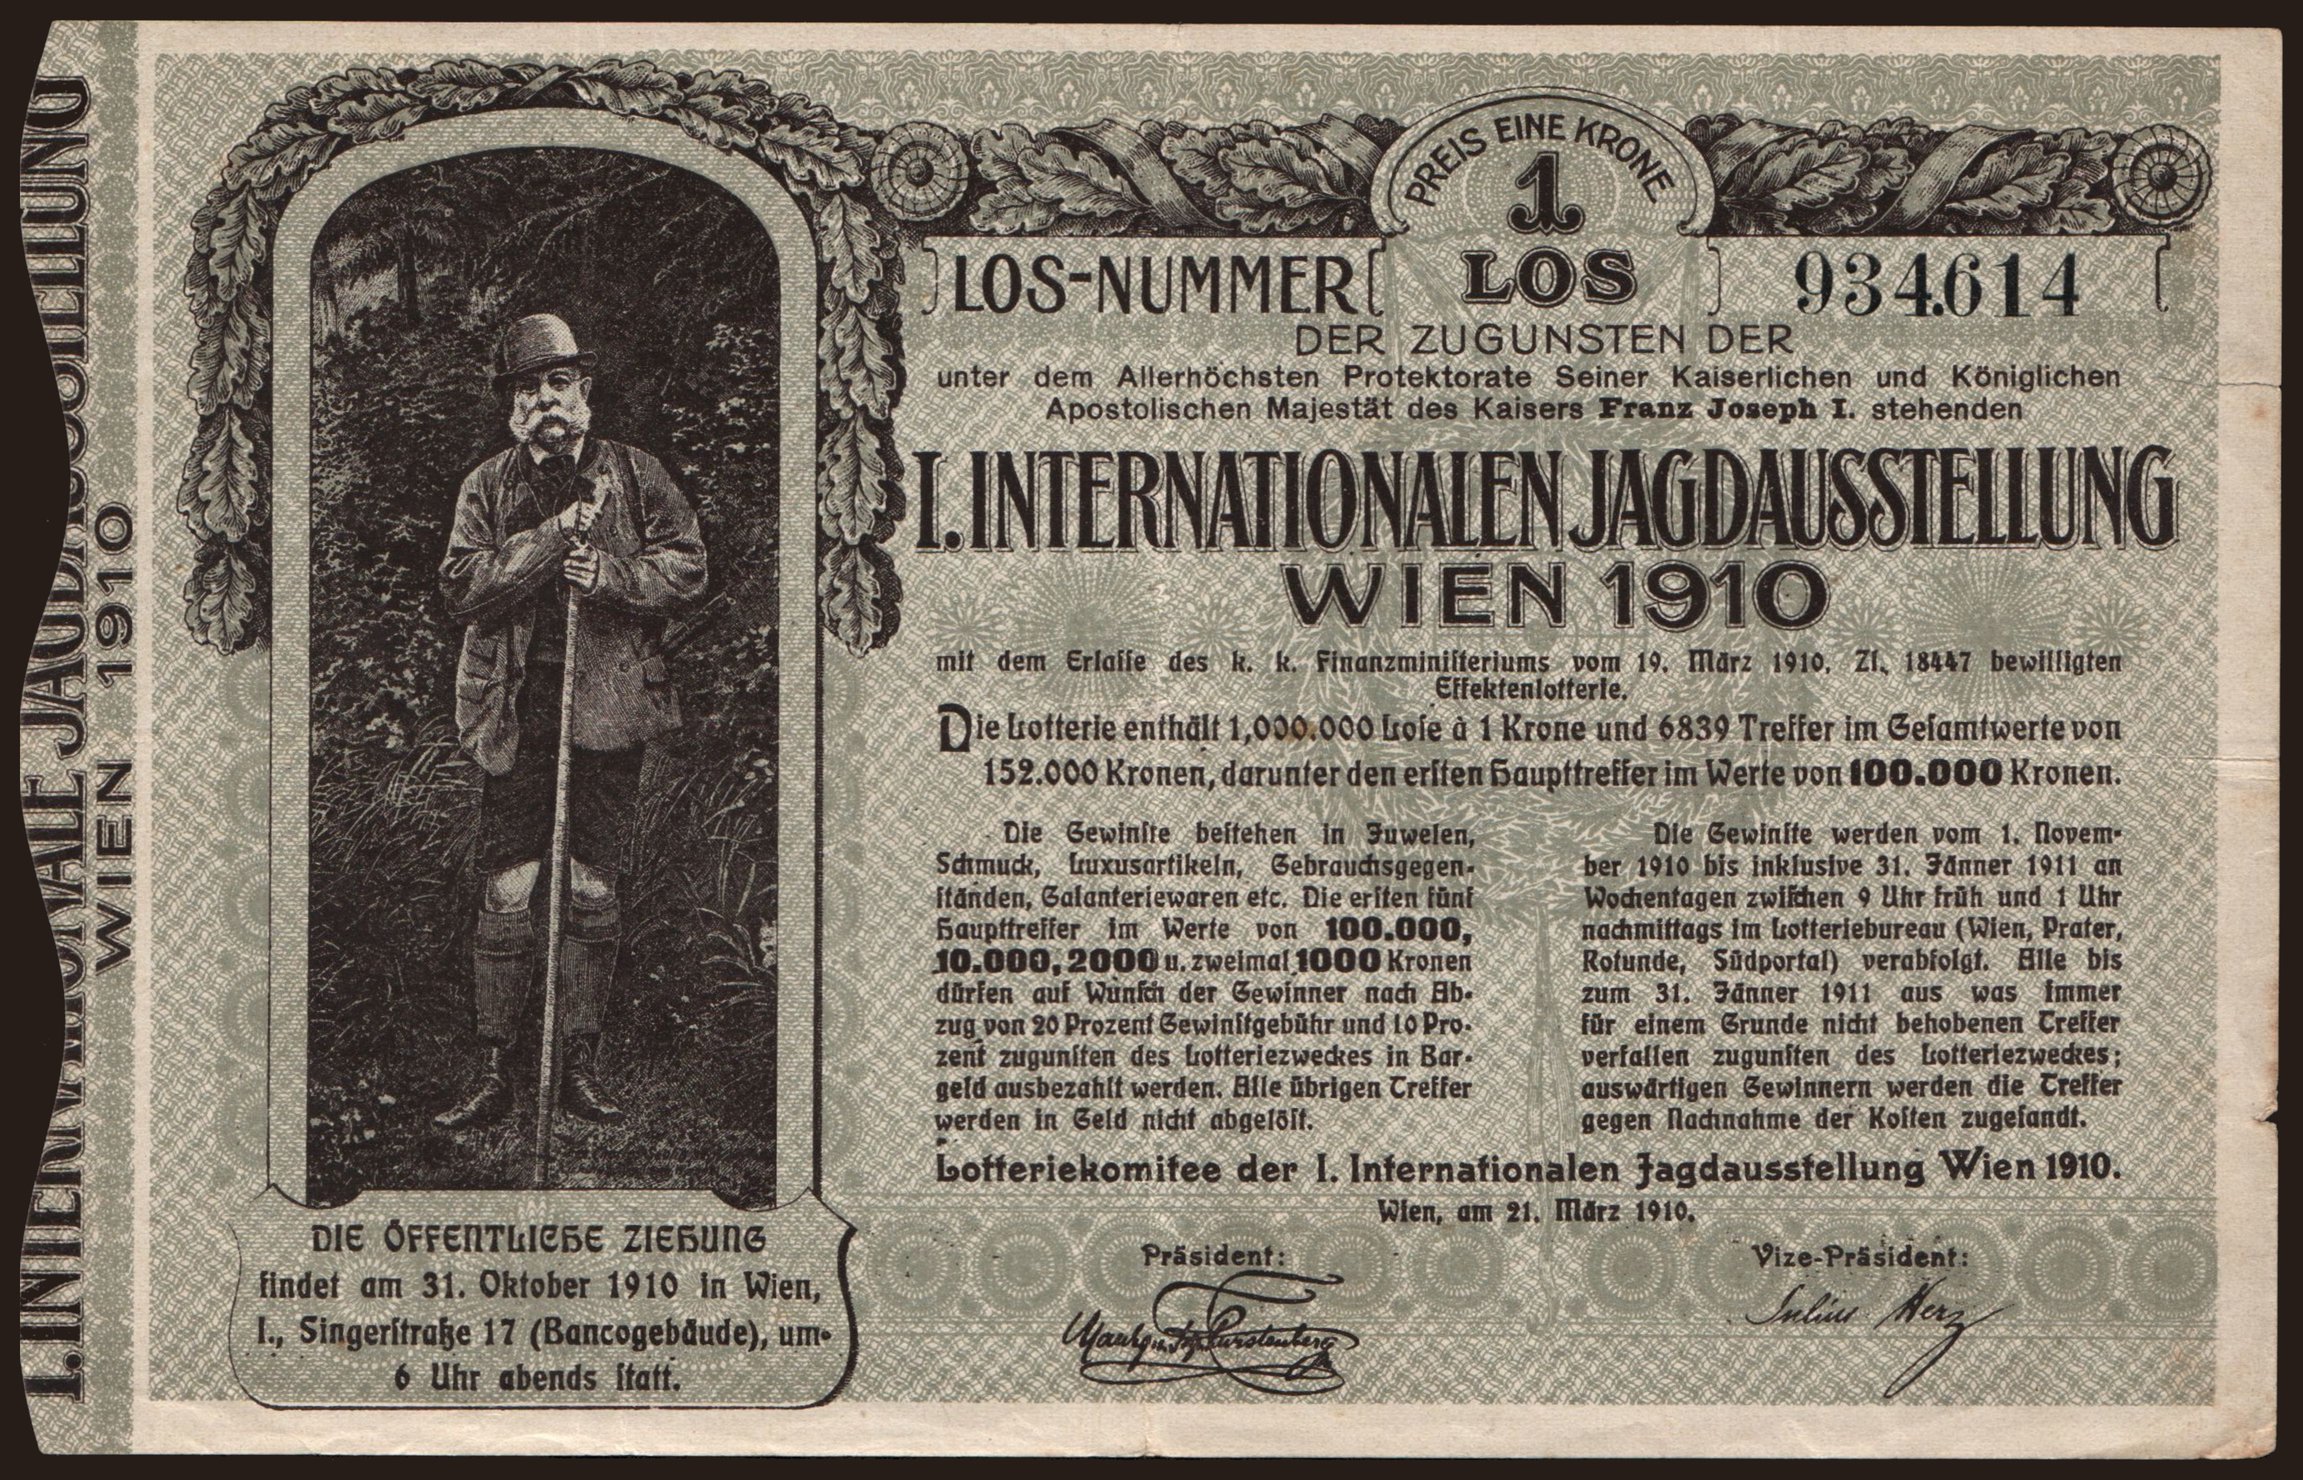 I. Internationalen Jagdausstellung, 1 Krone, 1910 | notafilia-kp.com